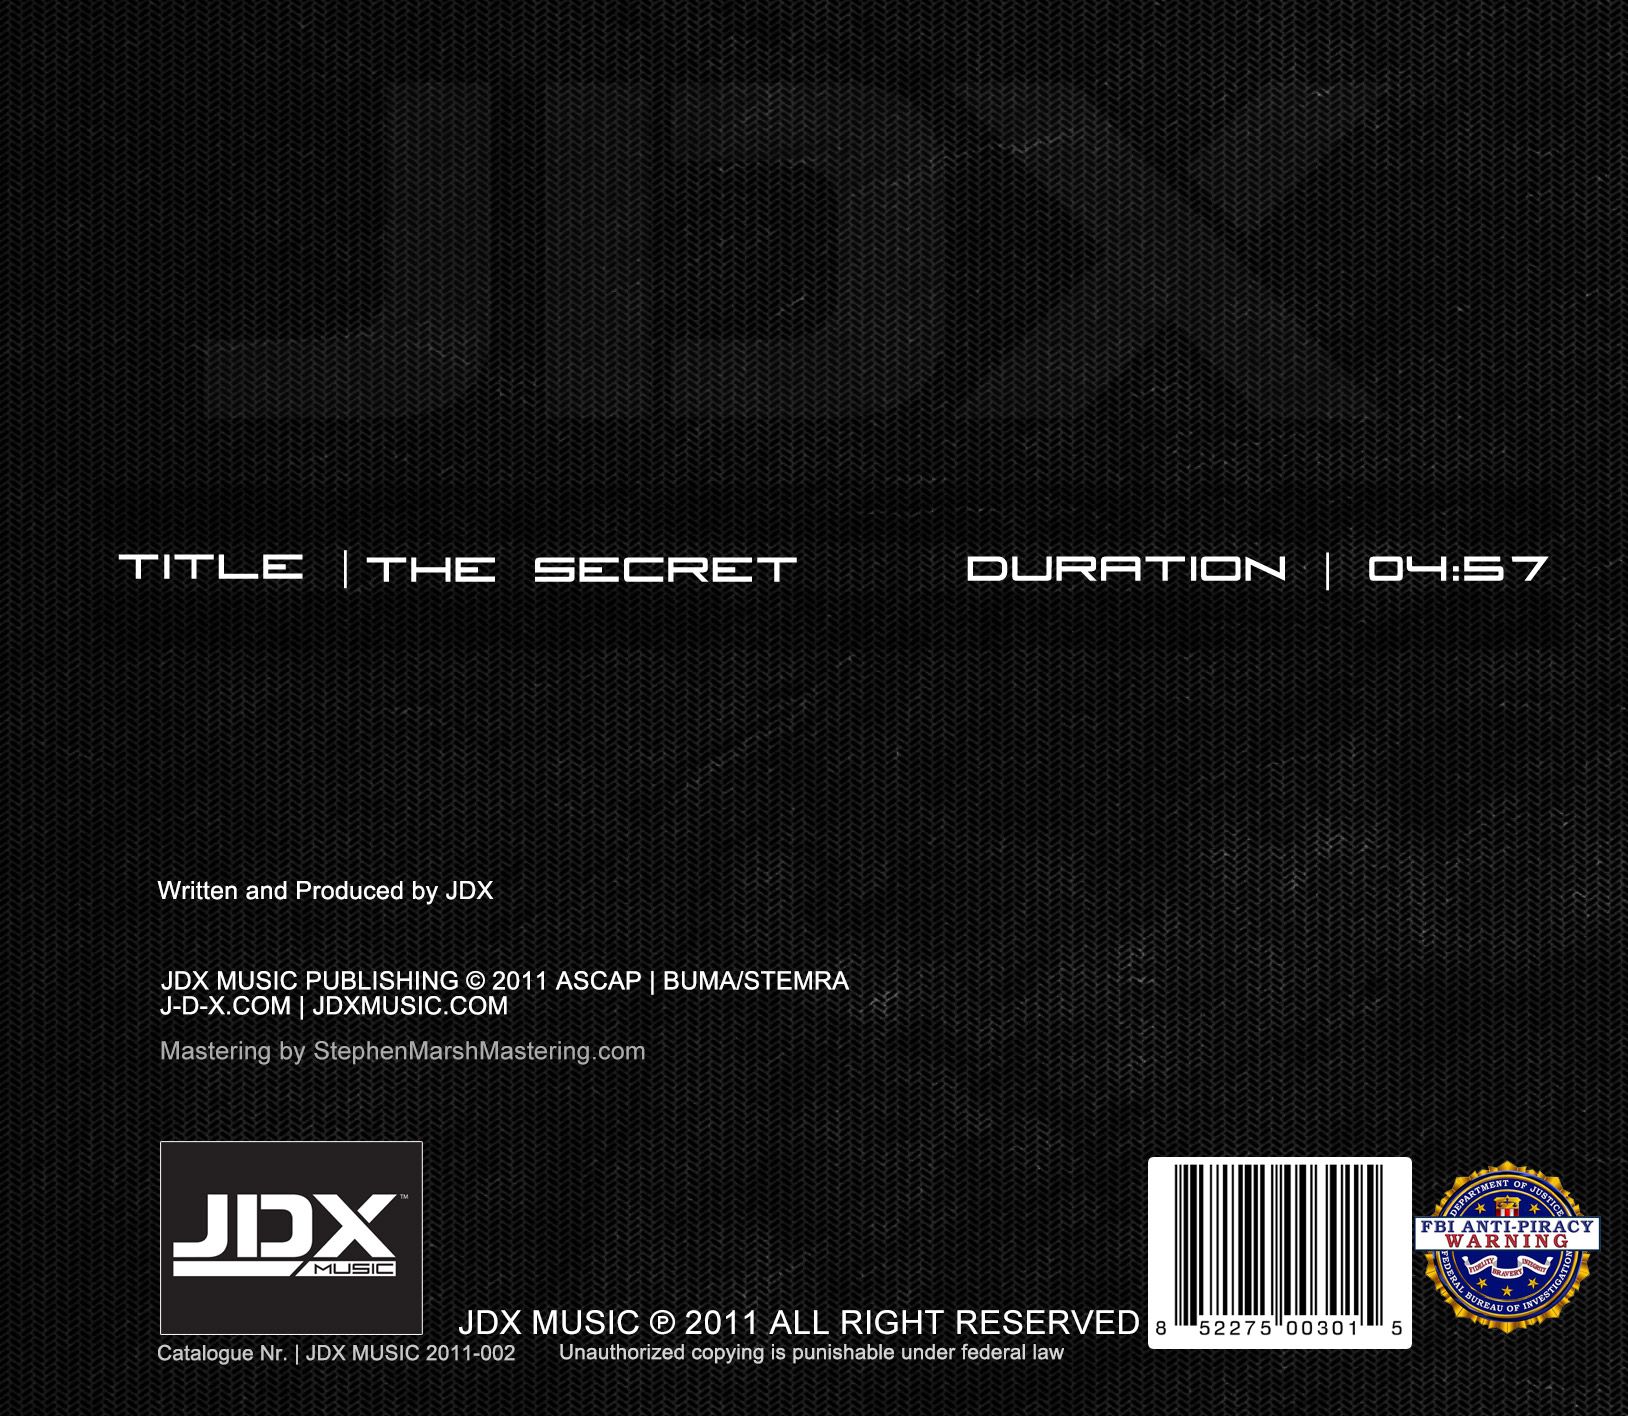 JDX - The Secret album art back.